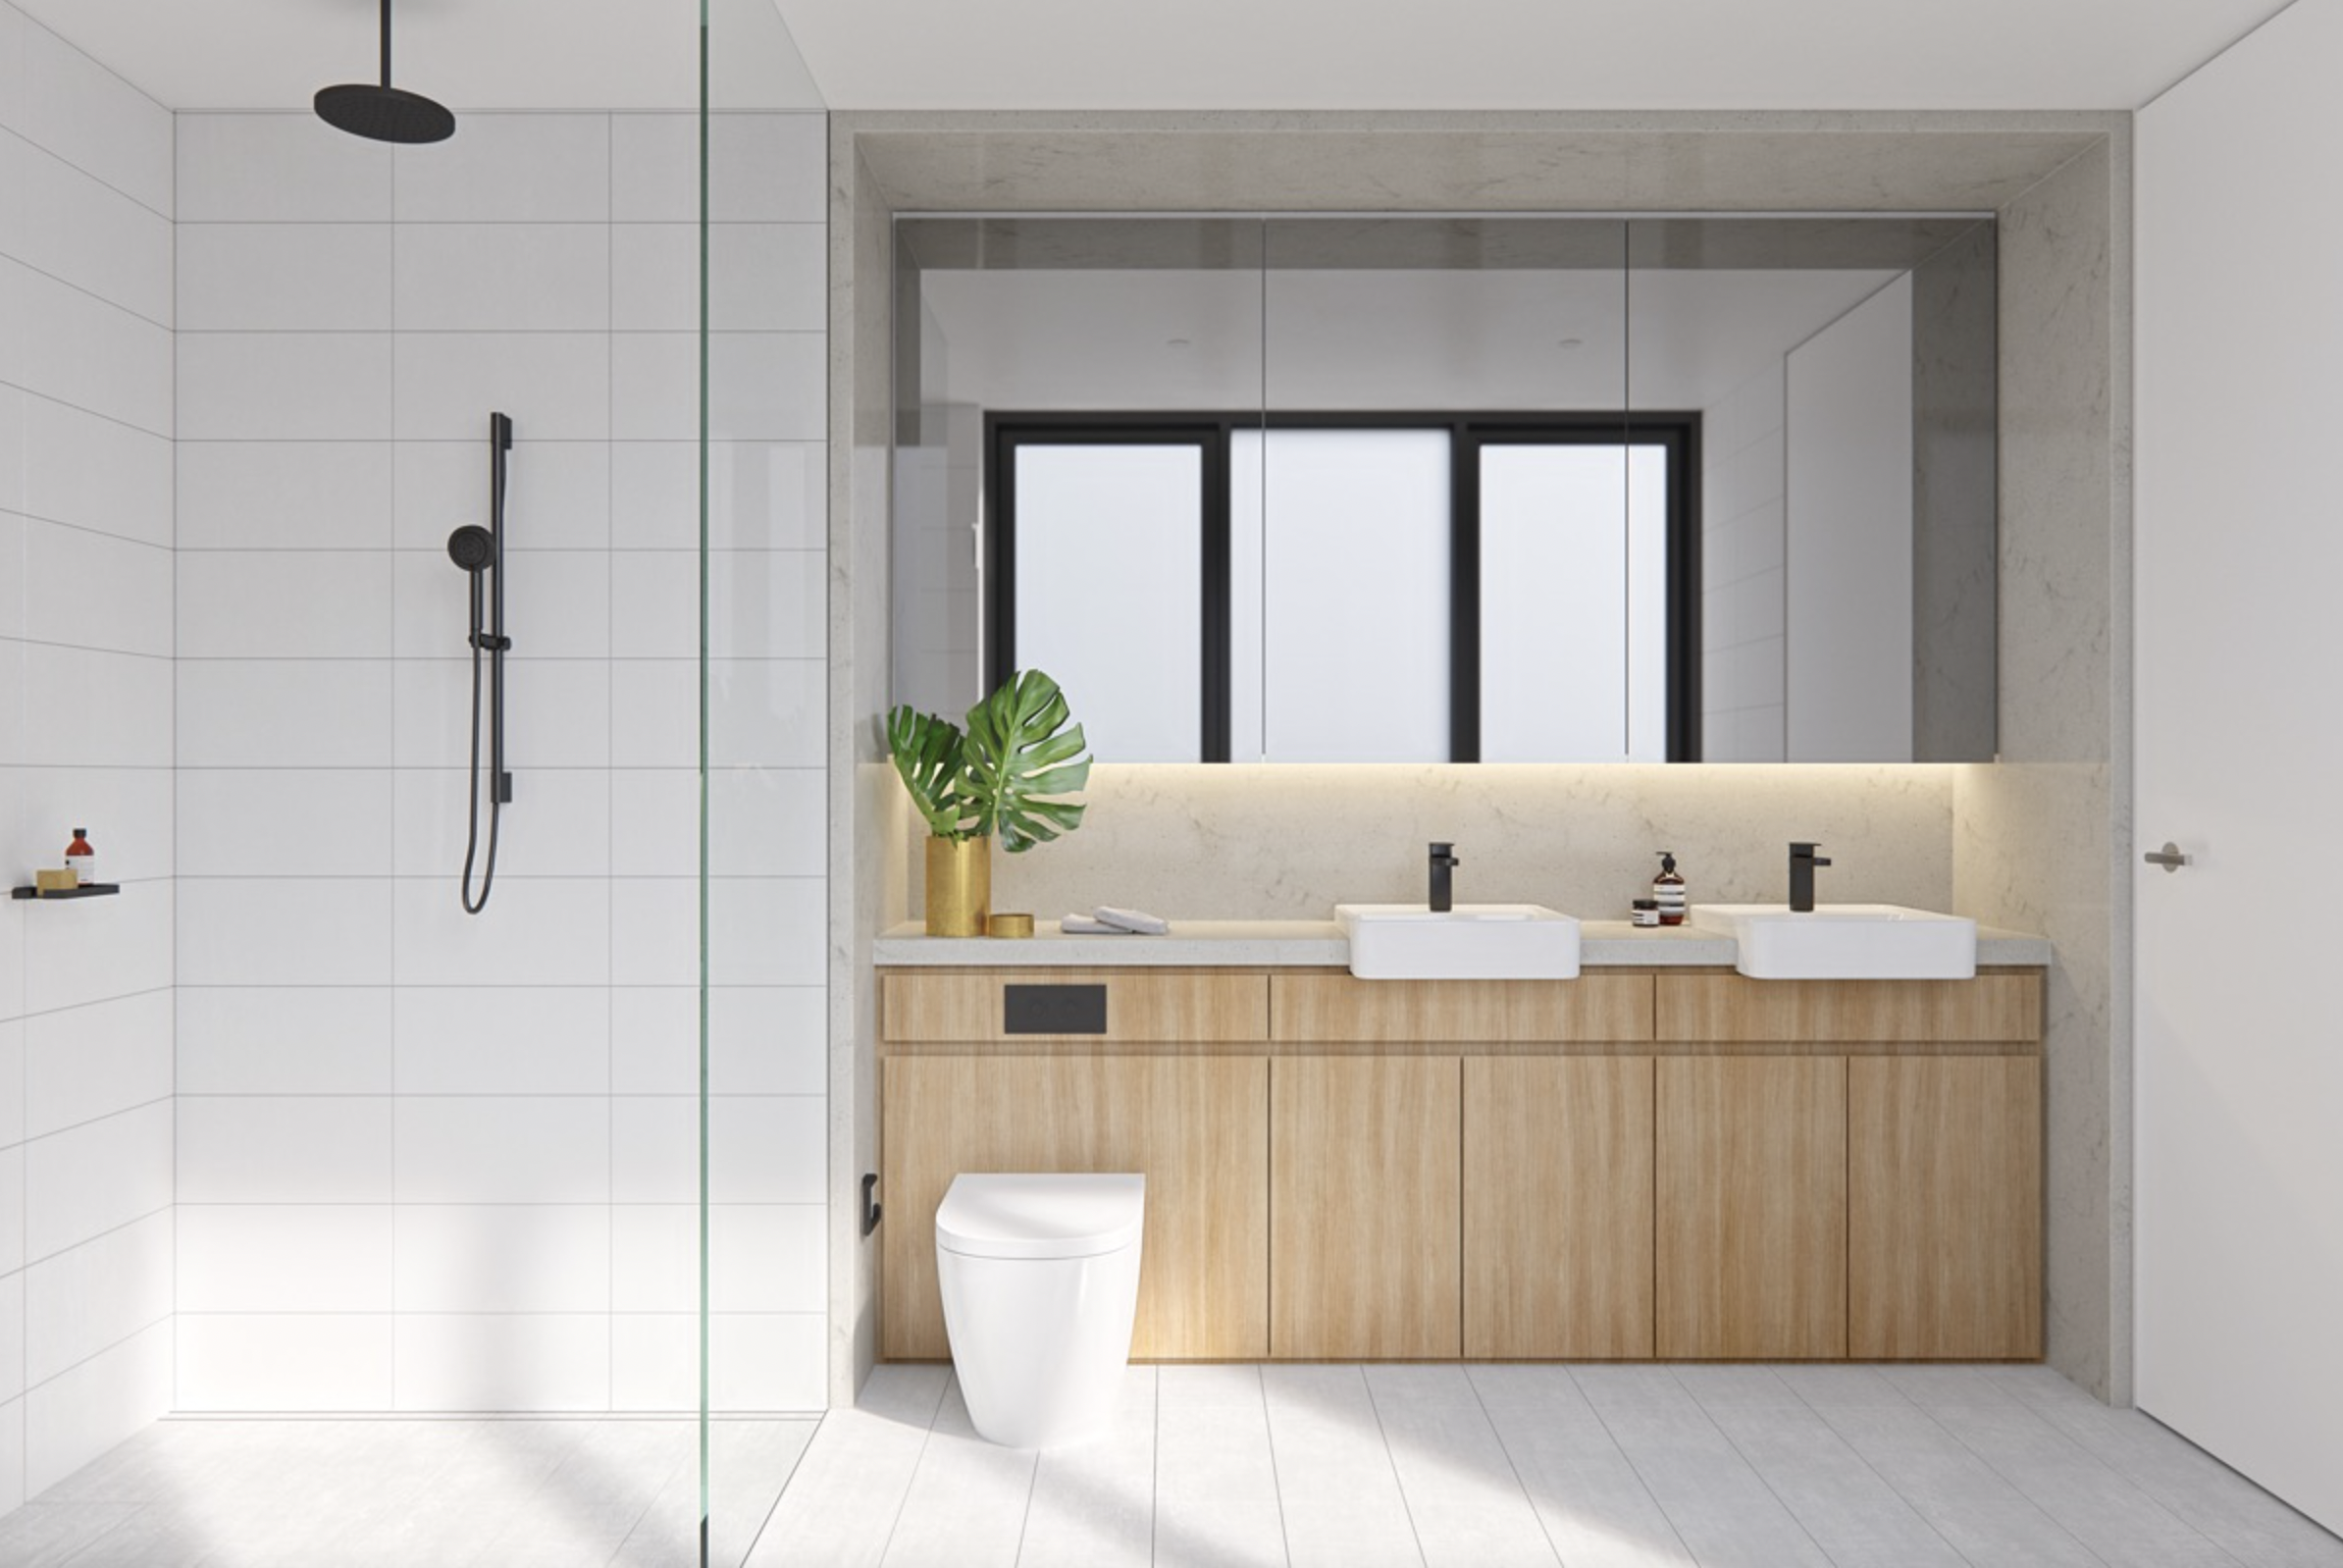 20 Trendy Minimalist Bathroom Design Ideas the Minimalist In You Will Love